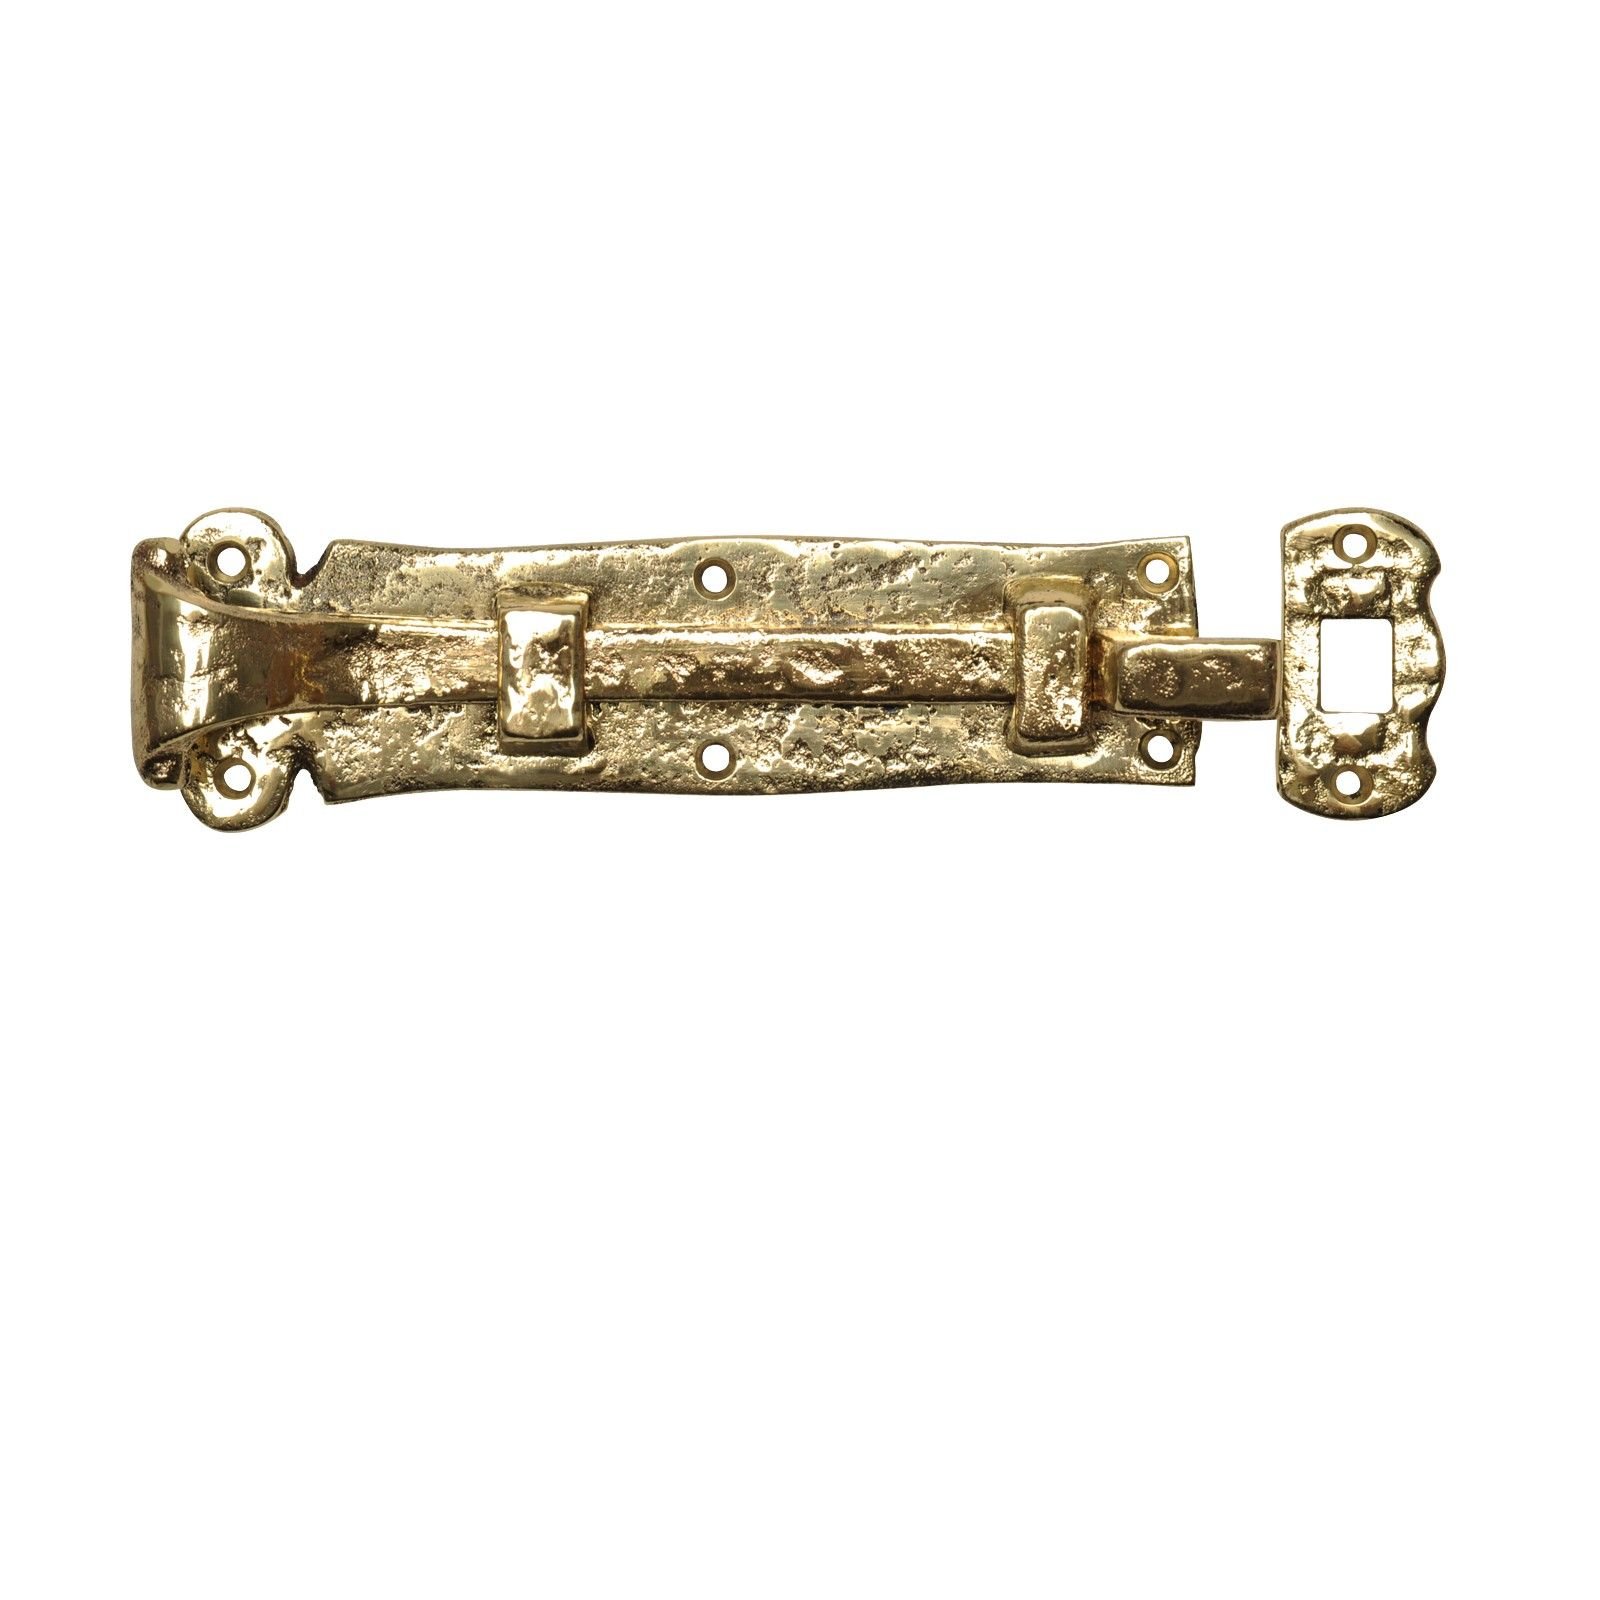 Decorative bolt in cast brass